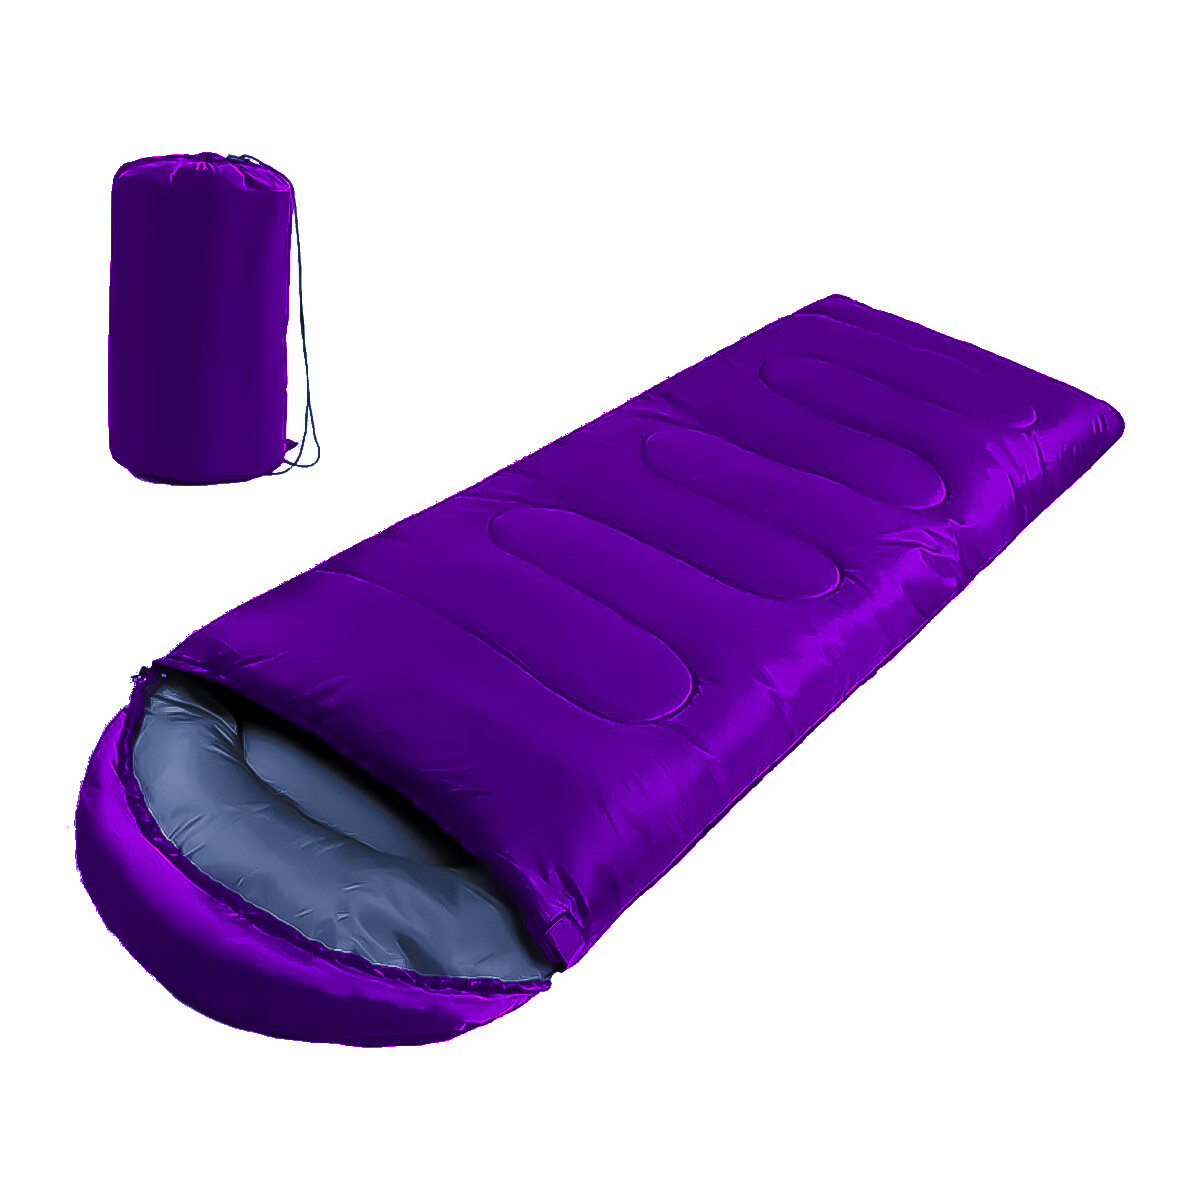 Sobre Dormir C/ Capucha Reforzado + Bolso Camping N1 - Violeta 